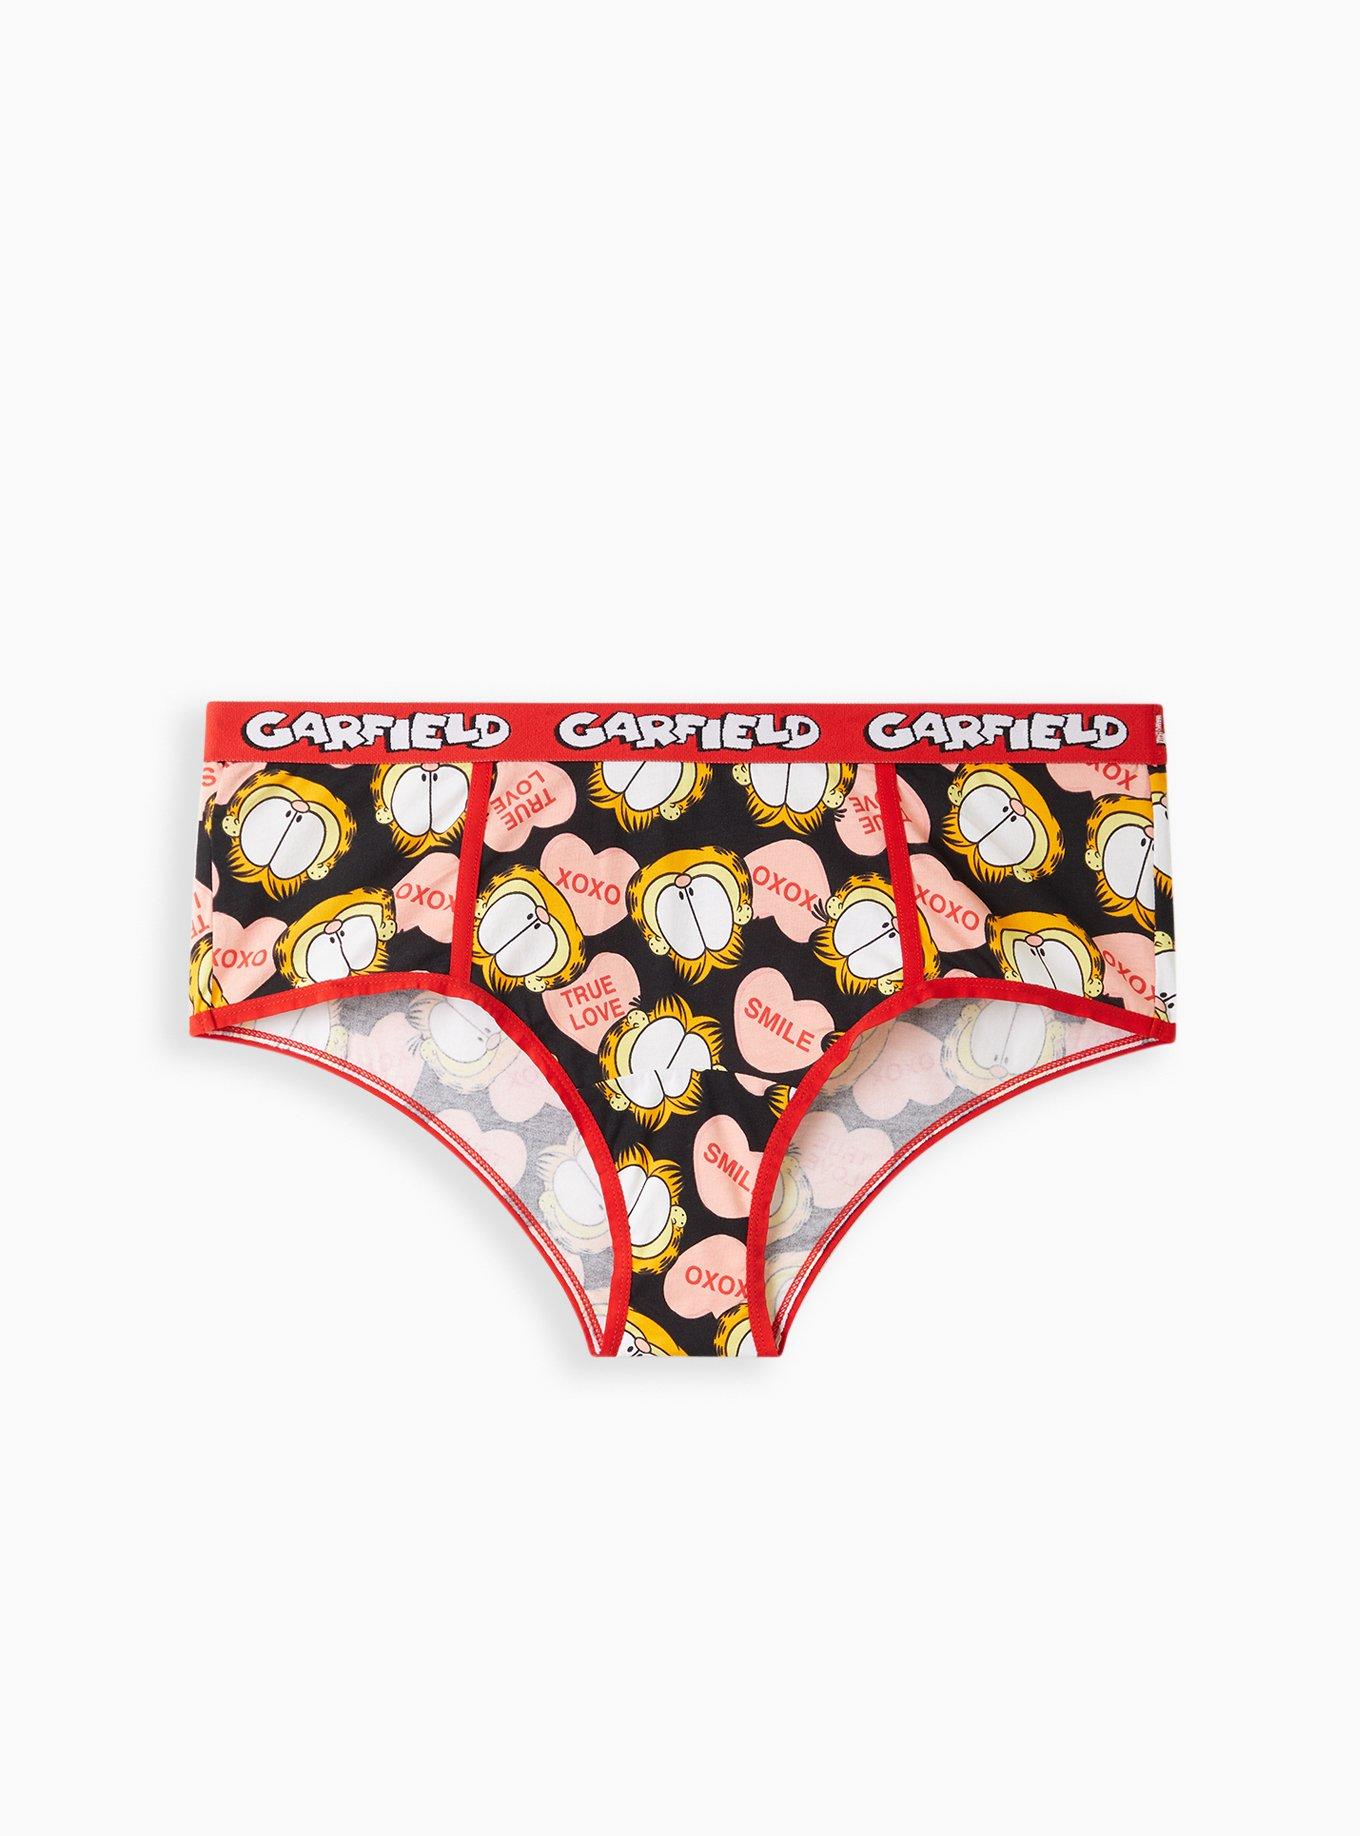 Cheeky Briefs Panties Underwear Comfortable Colorful Hearts Love